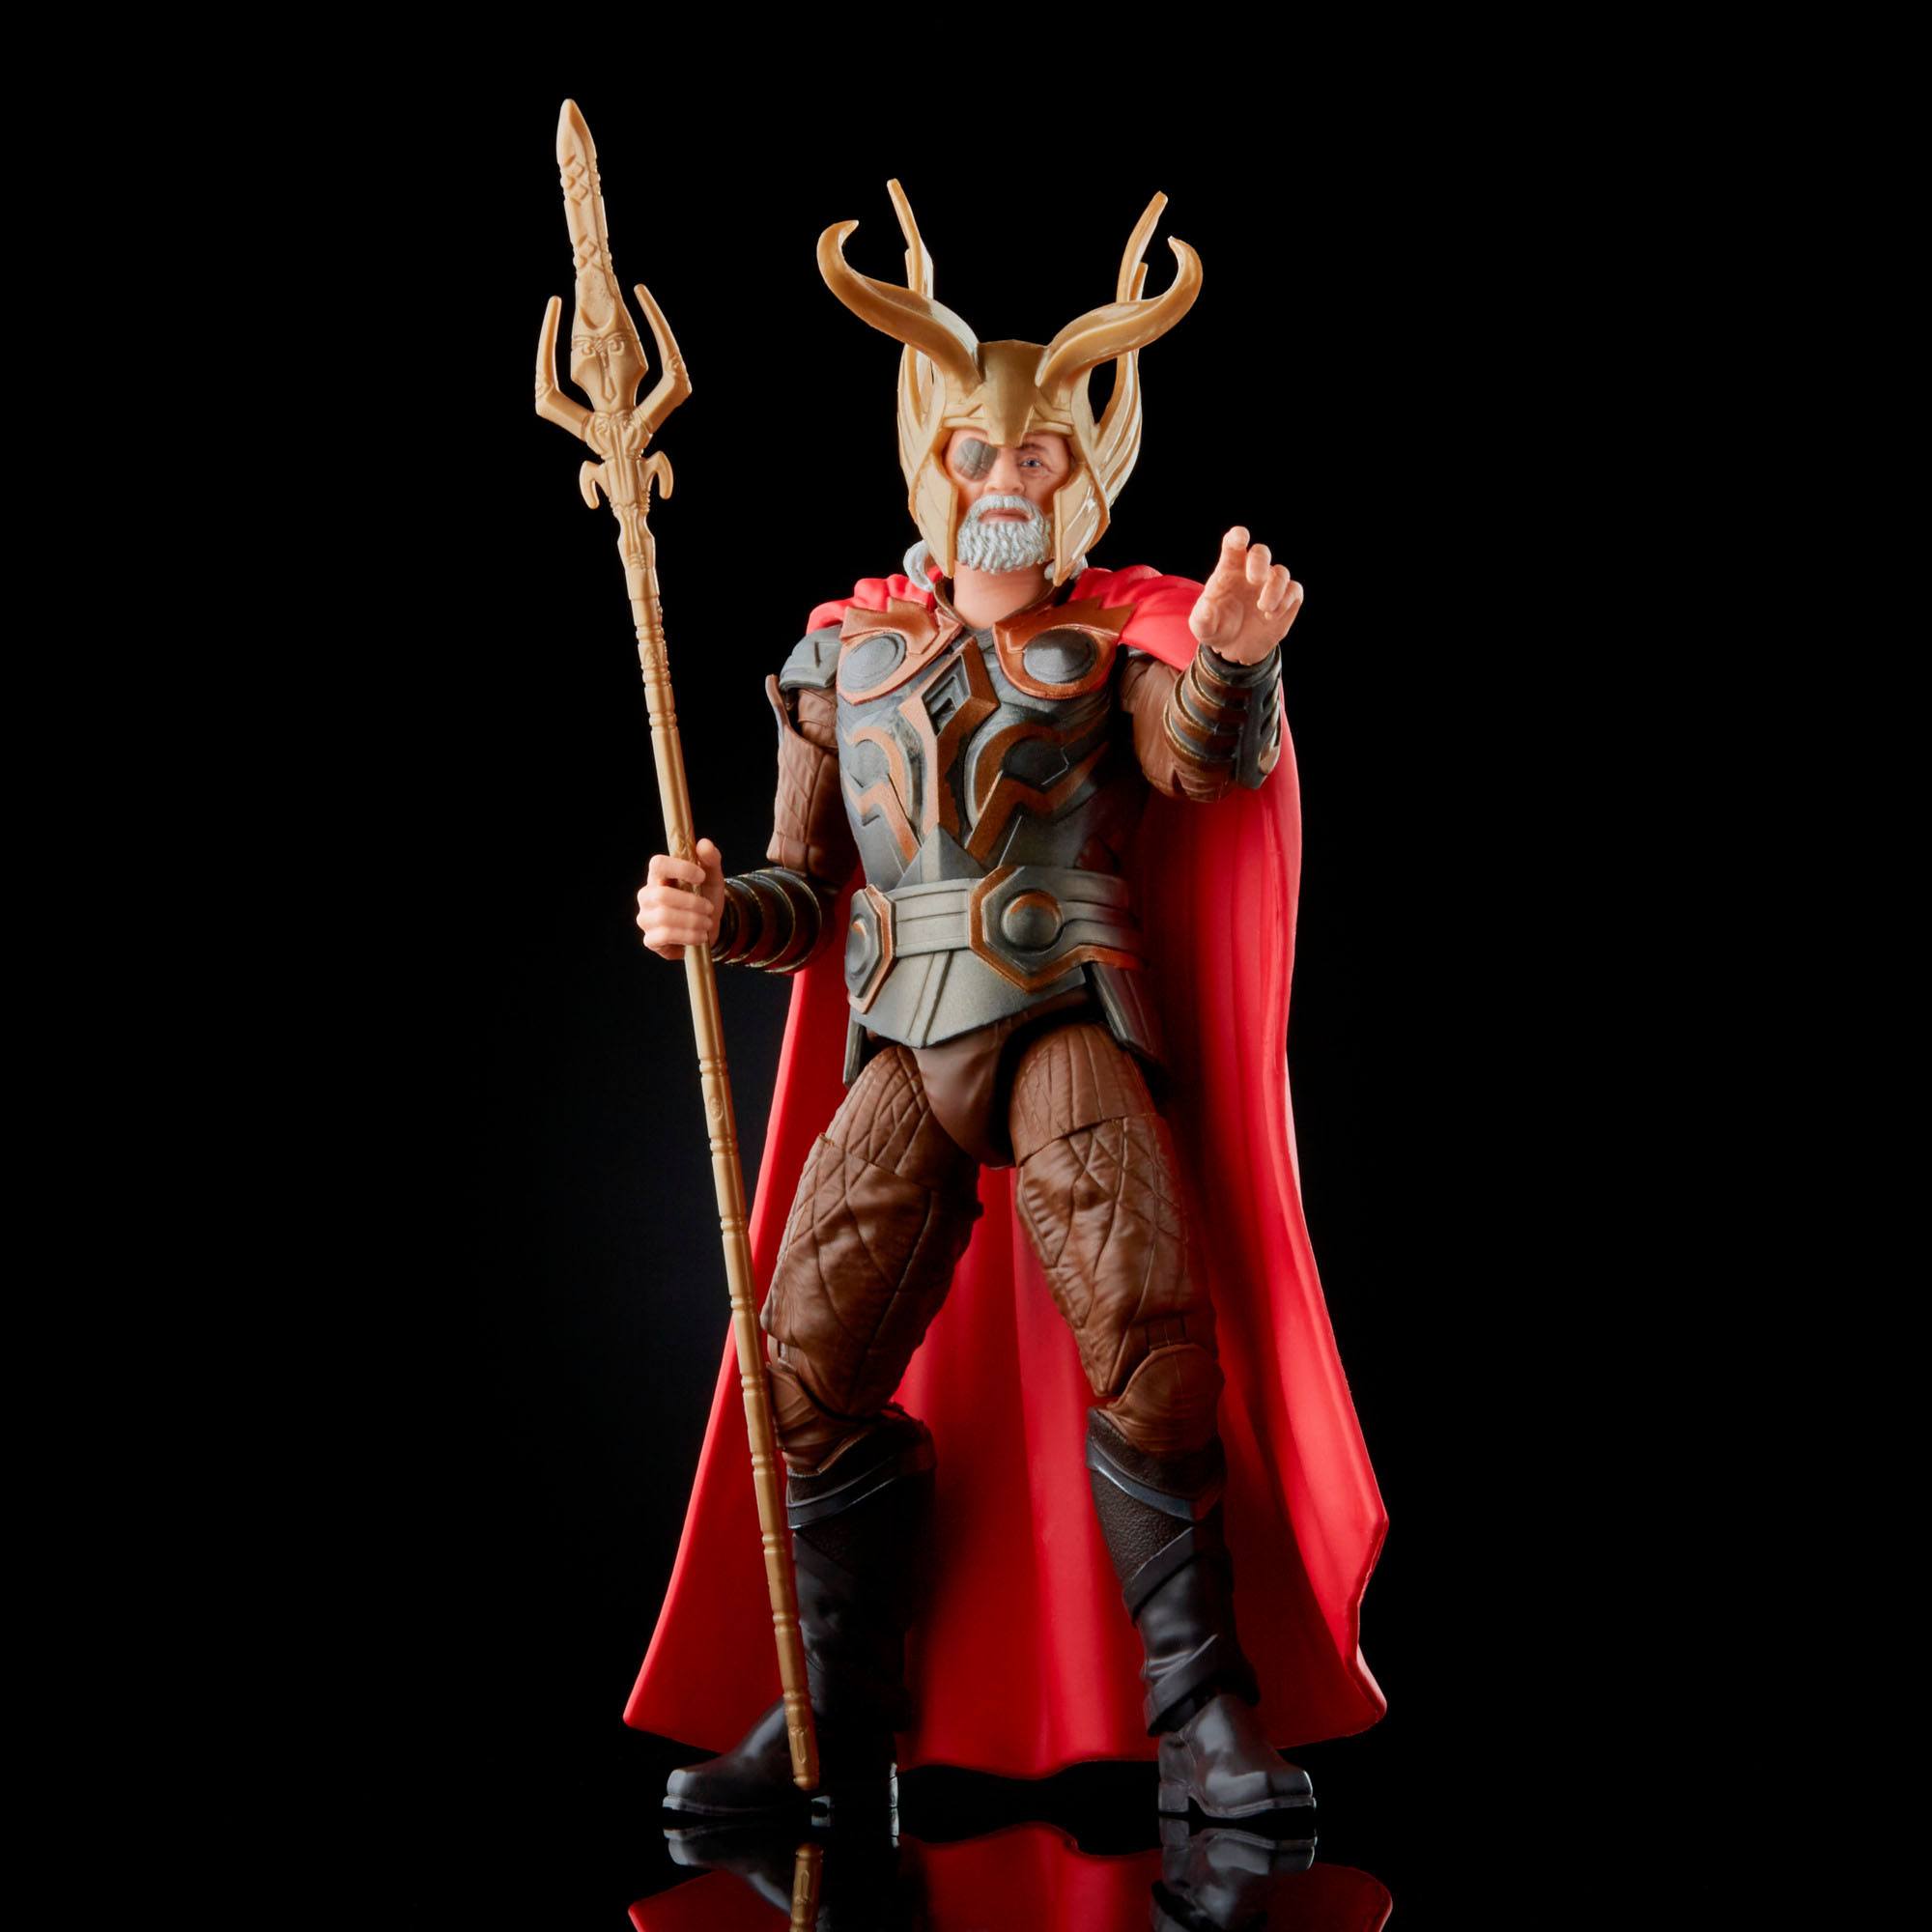 The Infinity Saga Marvel Legends Series Actionfigur 2021 Odin (Thor) 15 cm F01875L0 5010993839384